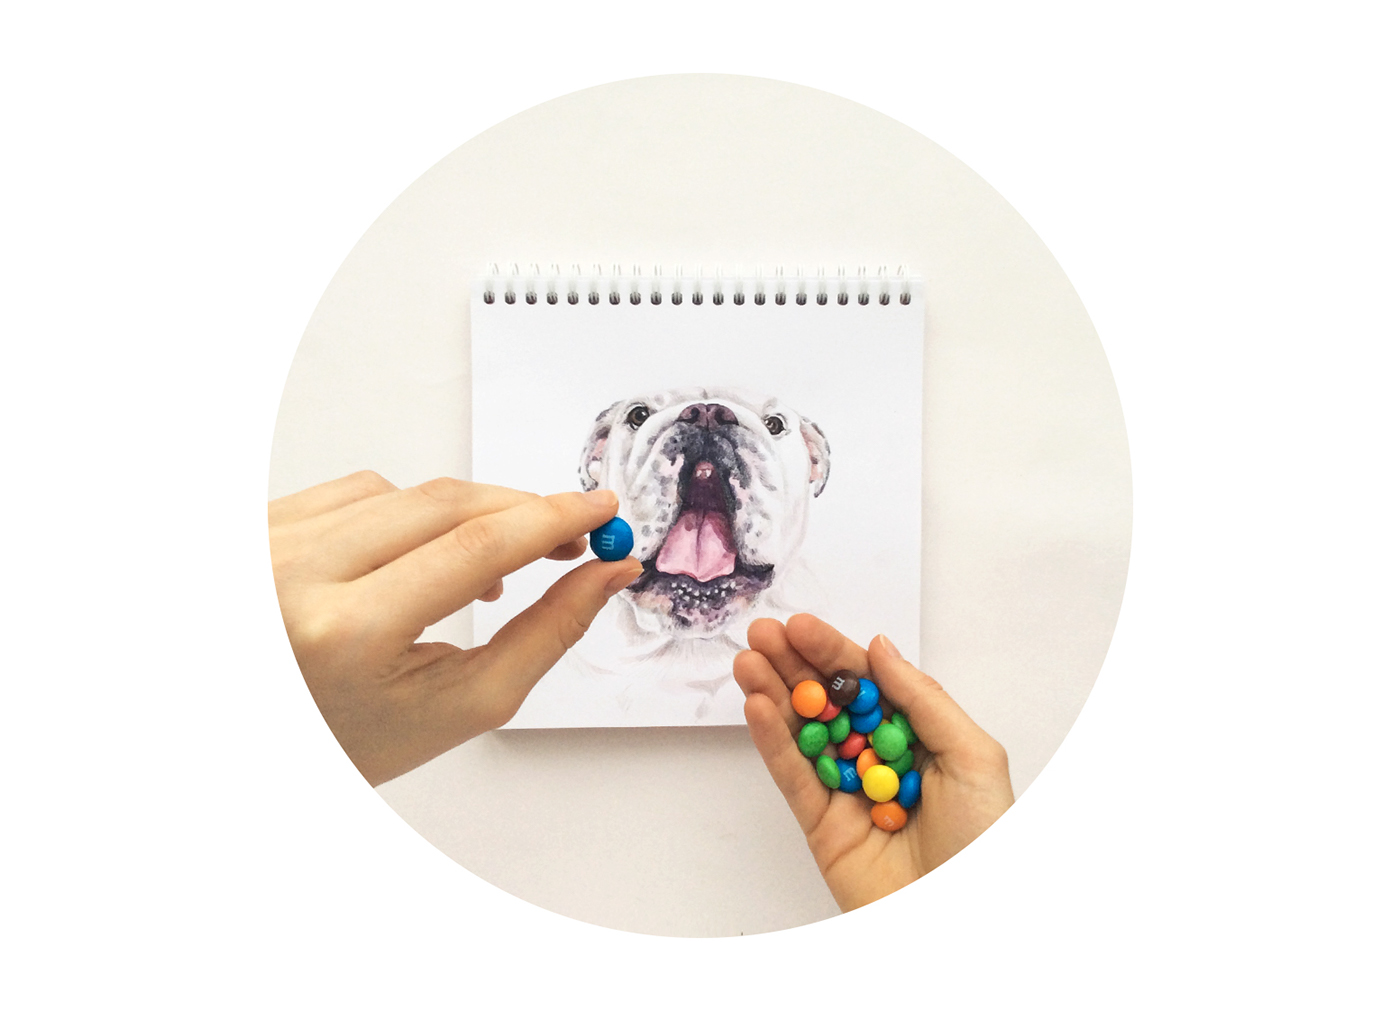 dog interactive dogs illustrations design watercolor photo hand Pet pets animal funny art artwork sketch